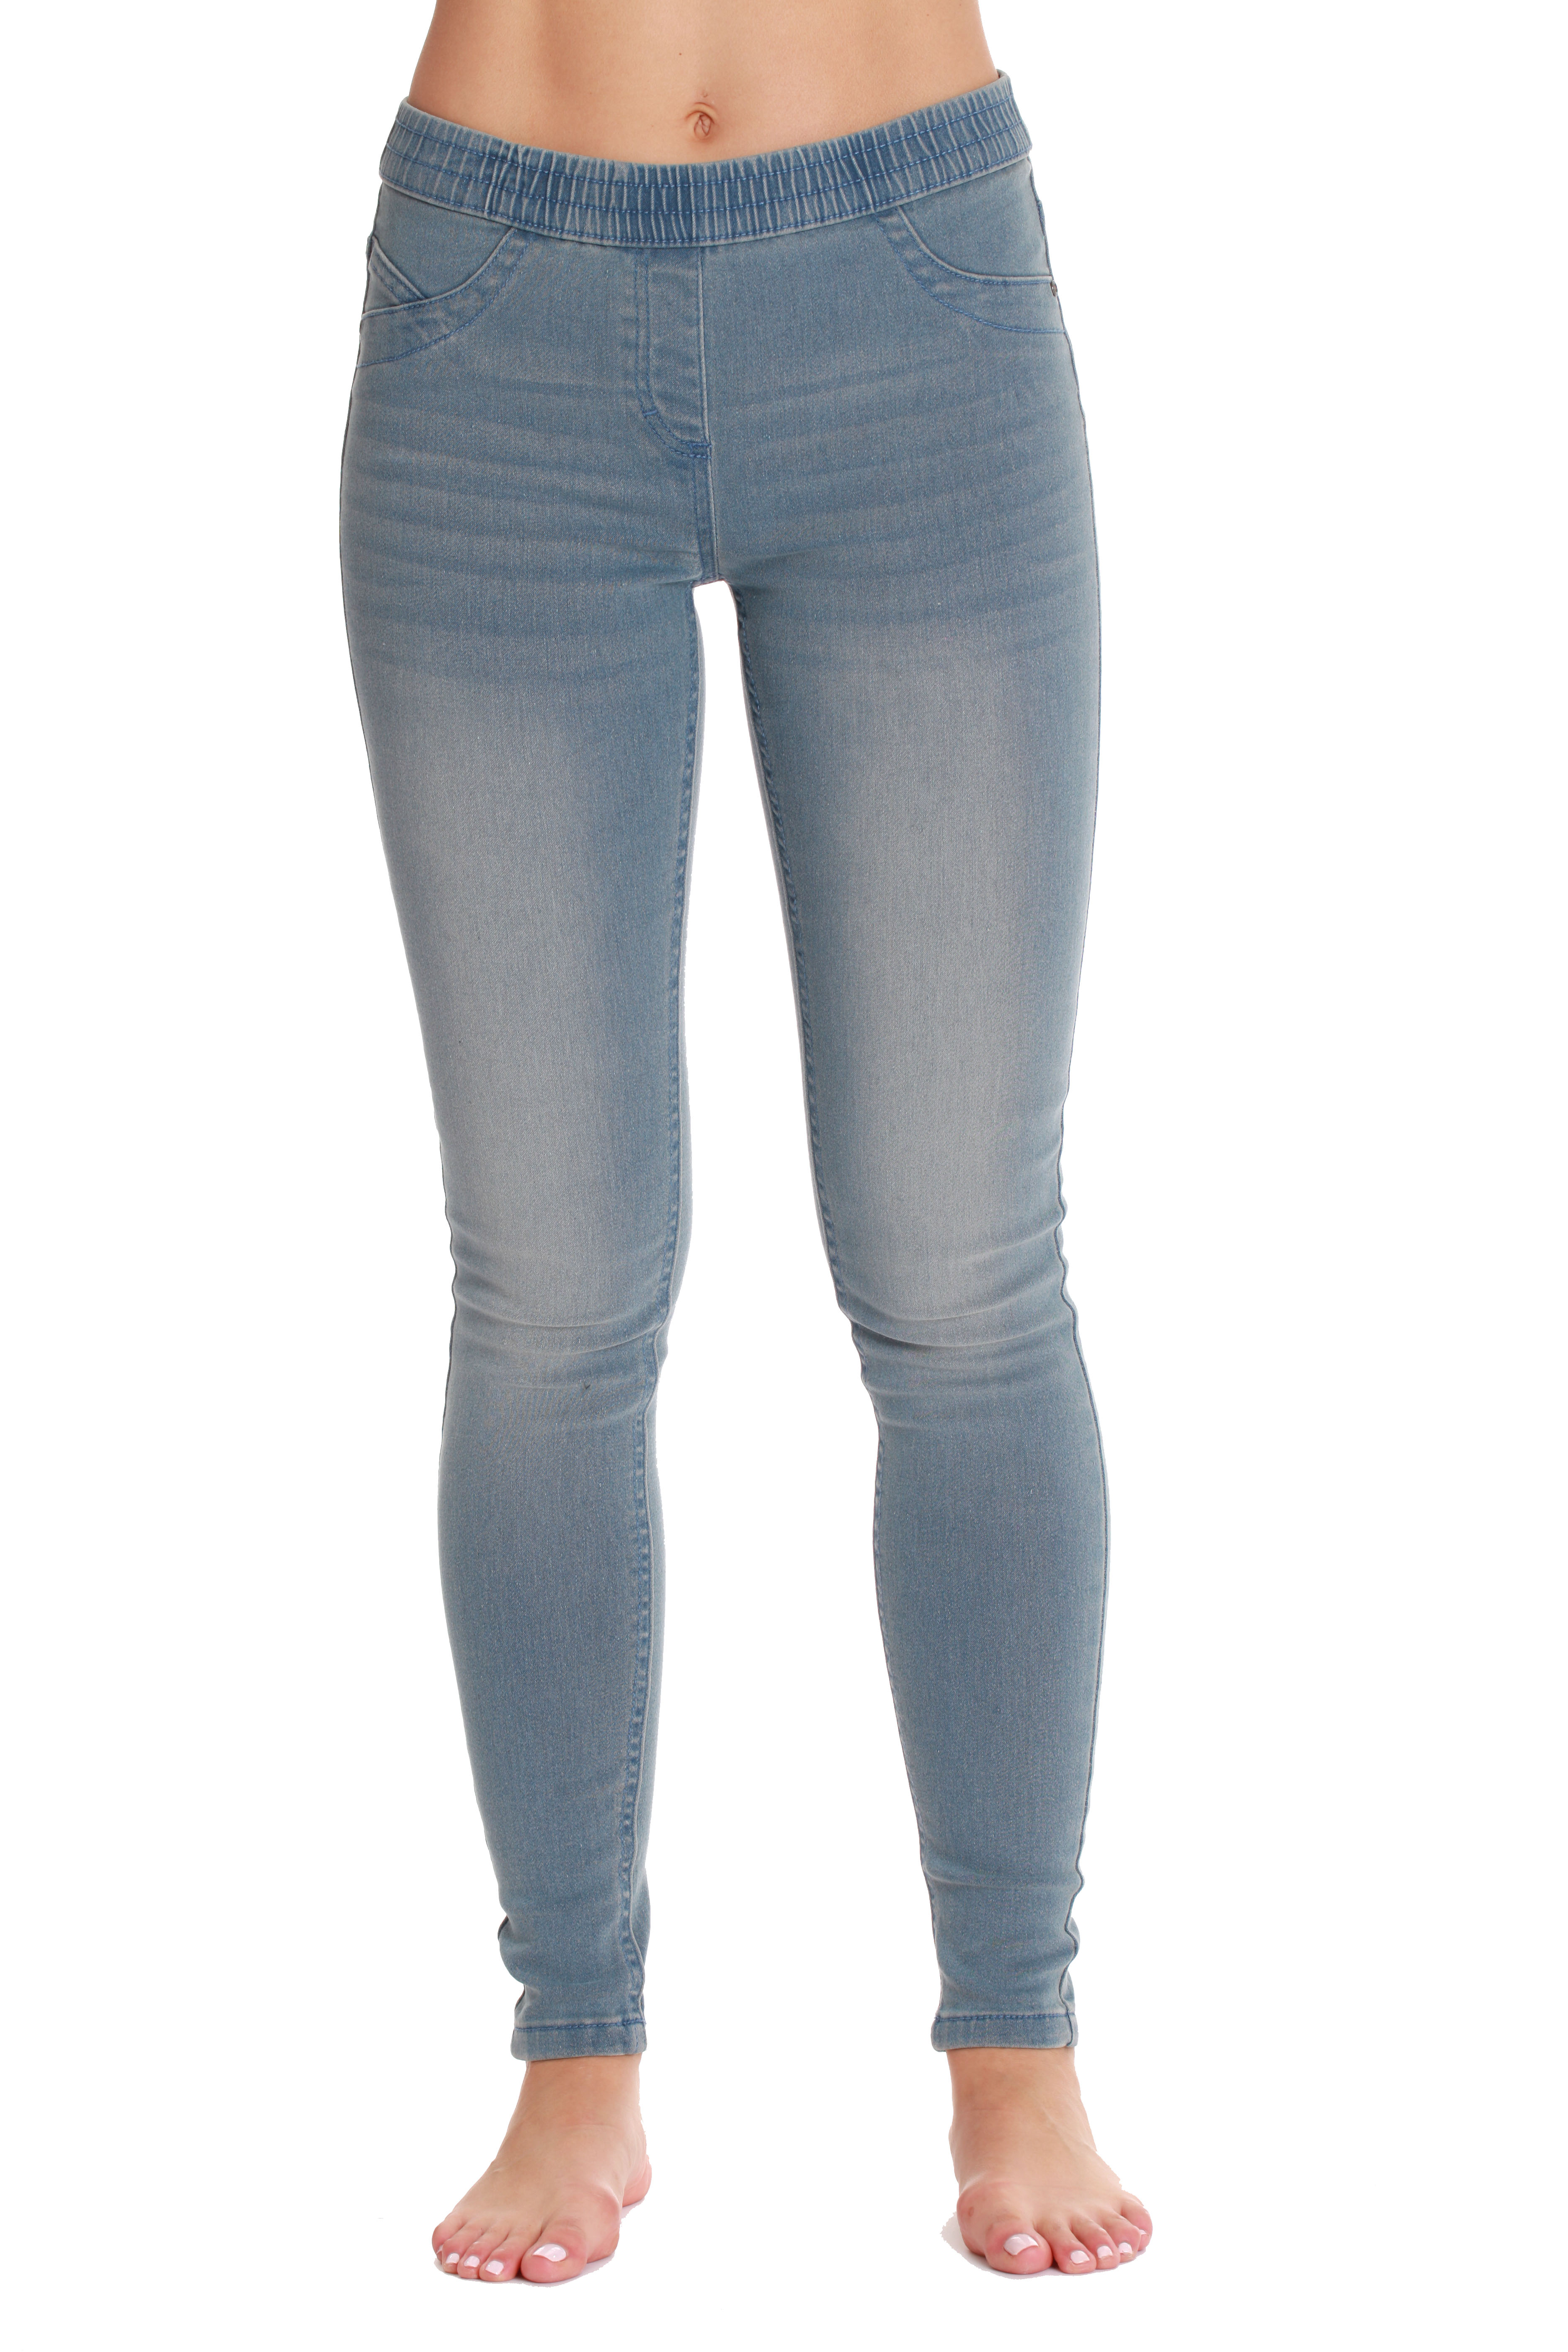 Just Love Women's Denim Jeggings with Pockets - Comfortable Stretch Jeans Leggings (Light Blue Denim, Medium) - image 1 of 2